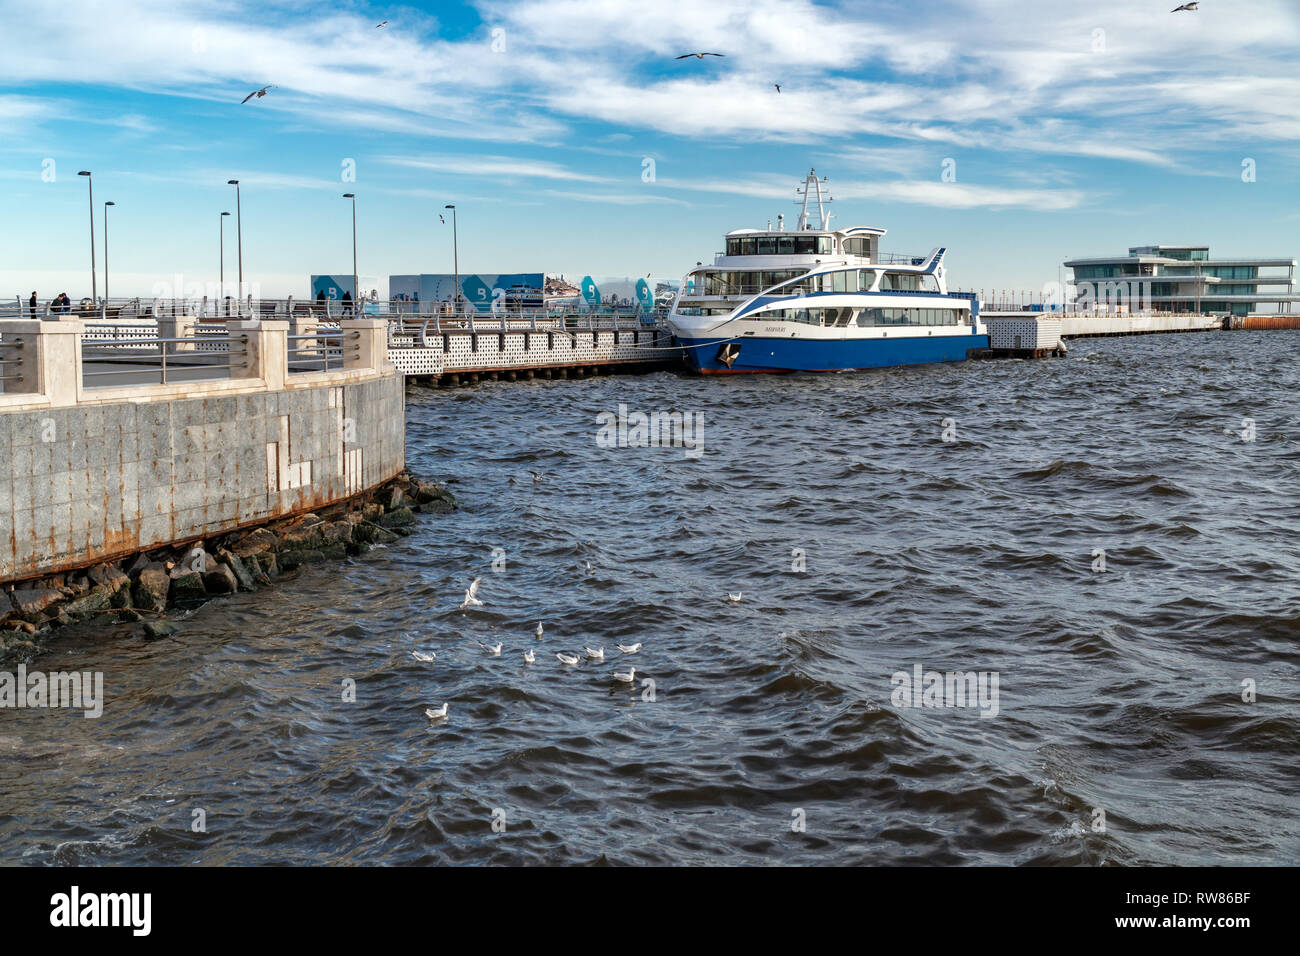 Azerbaijan, Baku, March 01 2019. Pleasure boat on the pier Stock Photo